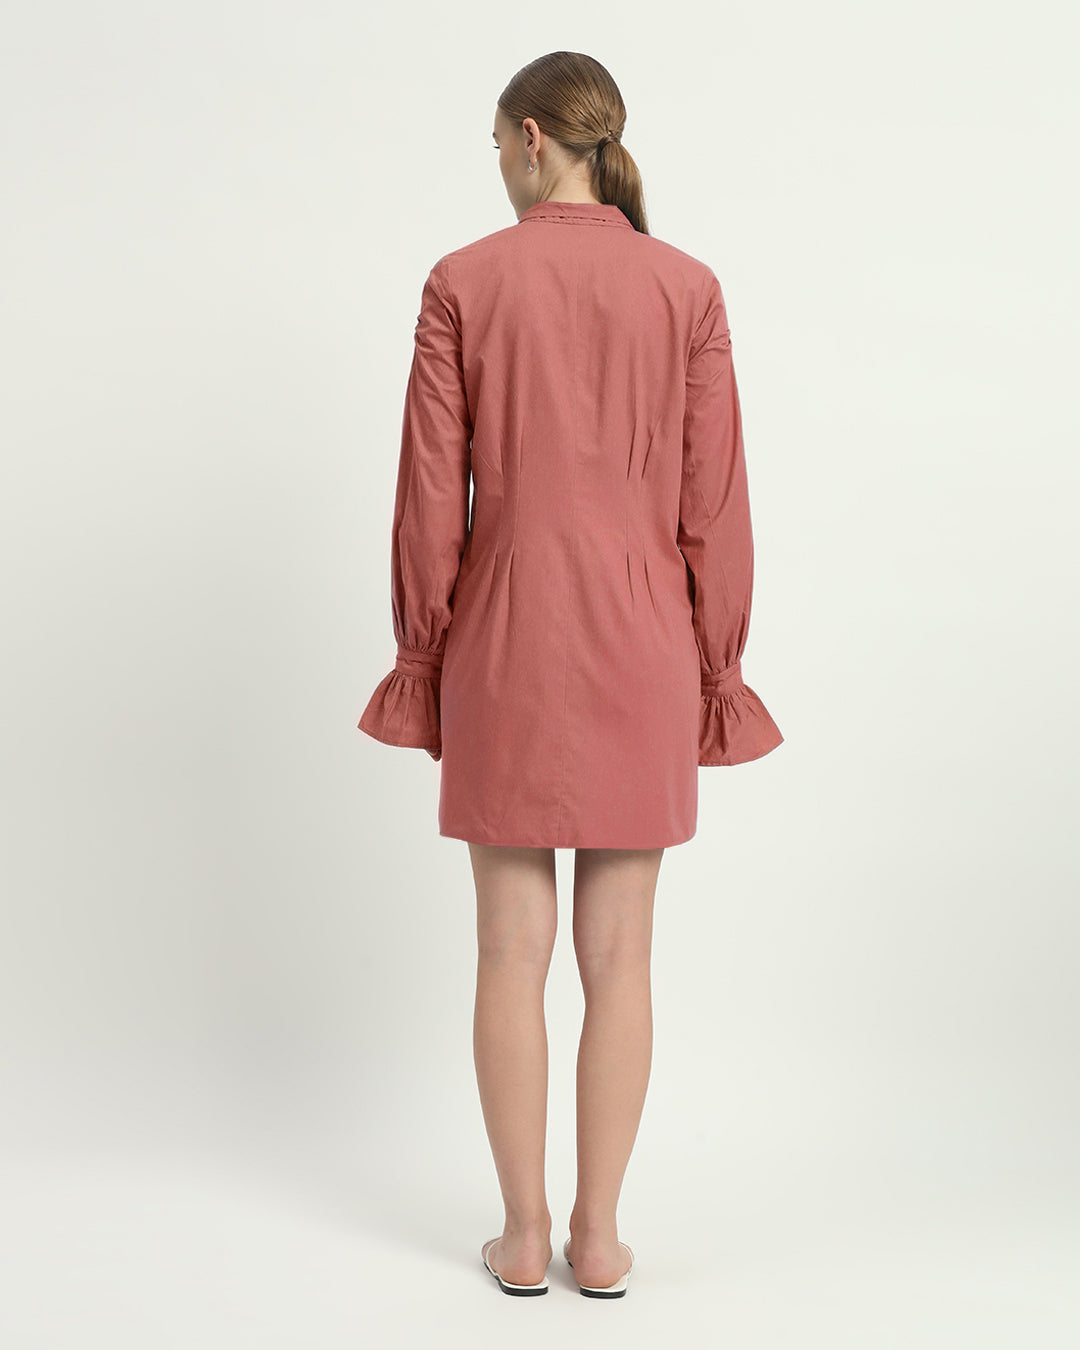 The Ivory Pink Sedona Cotton Dress